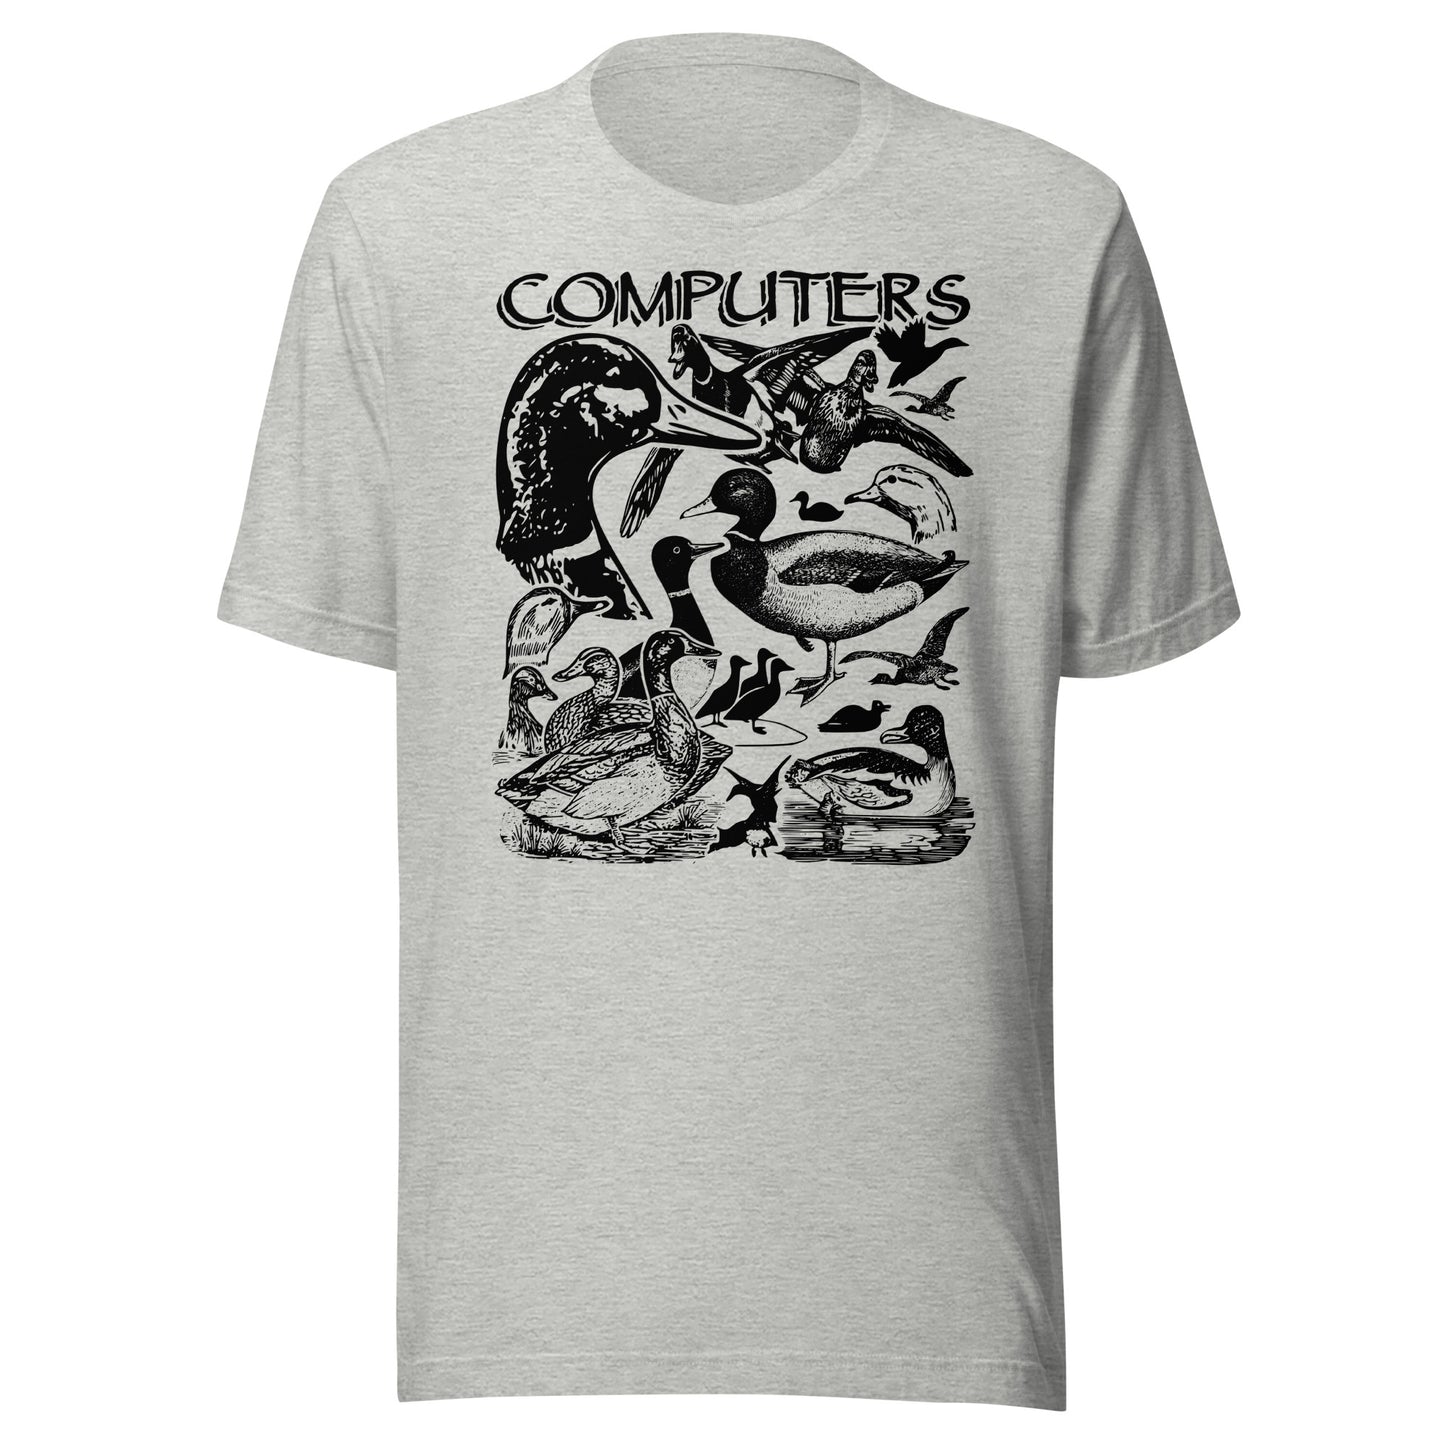 "Computers" Unisex t-shirt